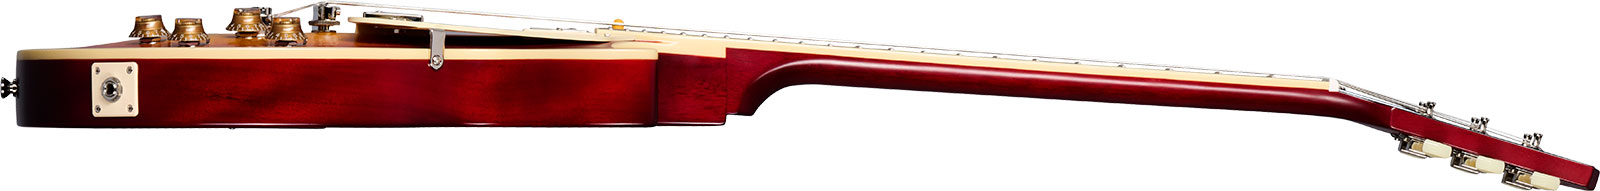 Epiphone 1959 Les Paul Standard Inspired By 2h Gibson Ht Lau - Vos Factory Burst - Single-Cut-E-Gitarre - Variation 2